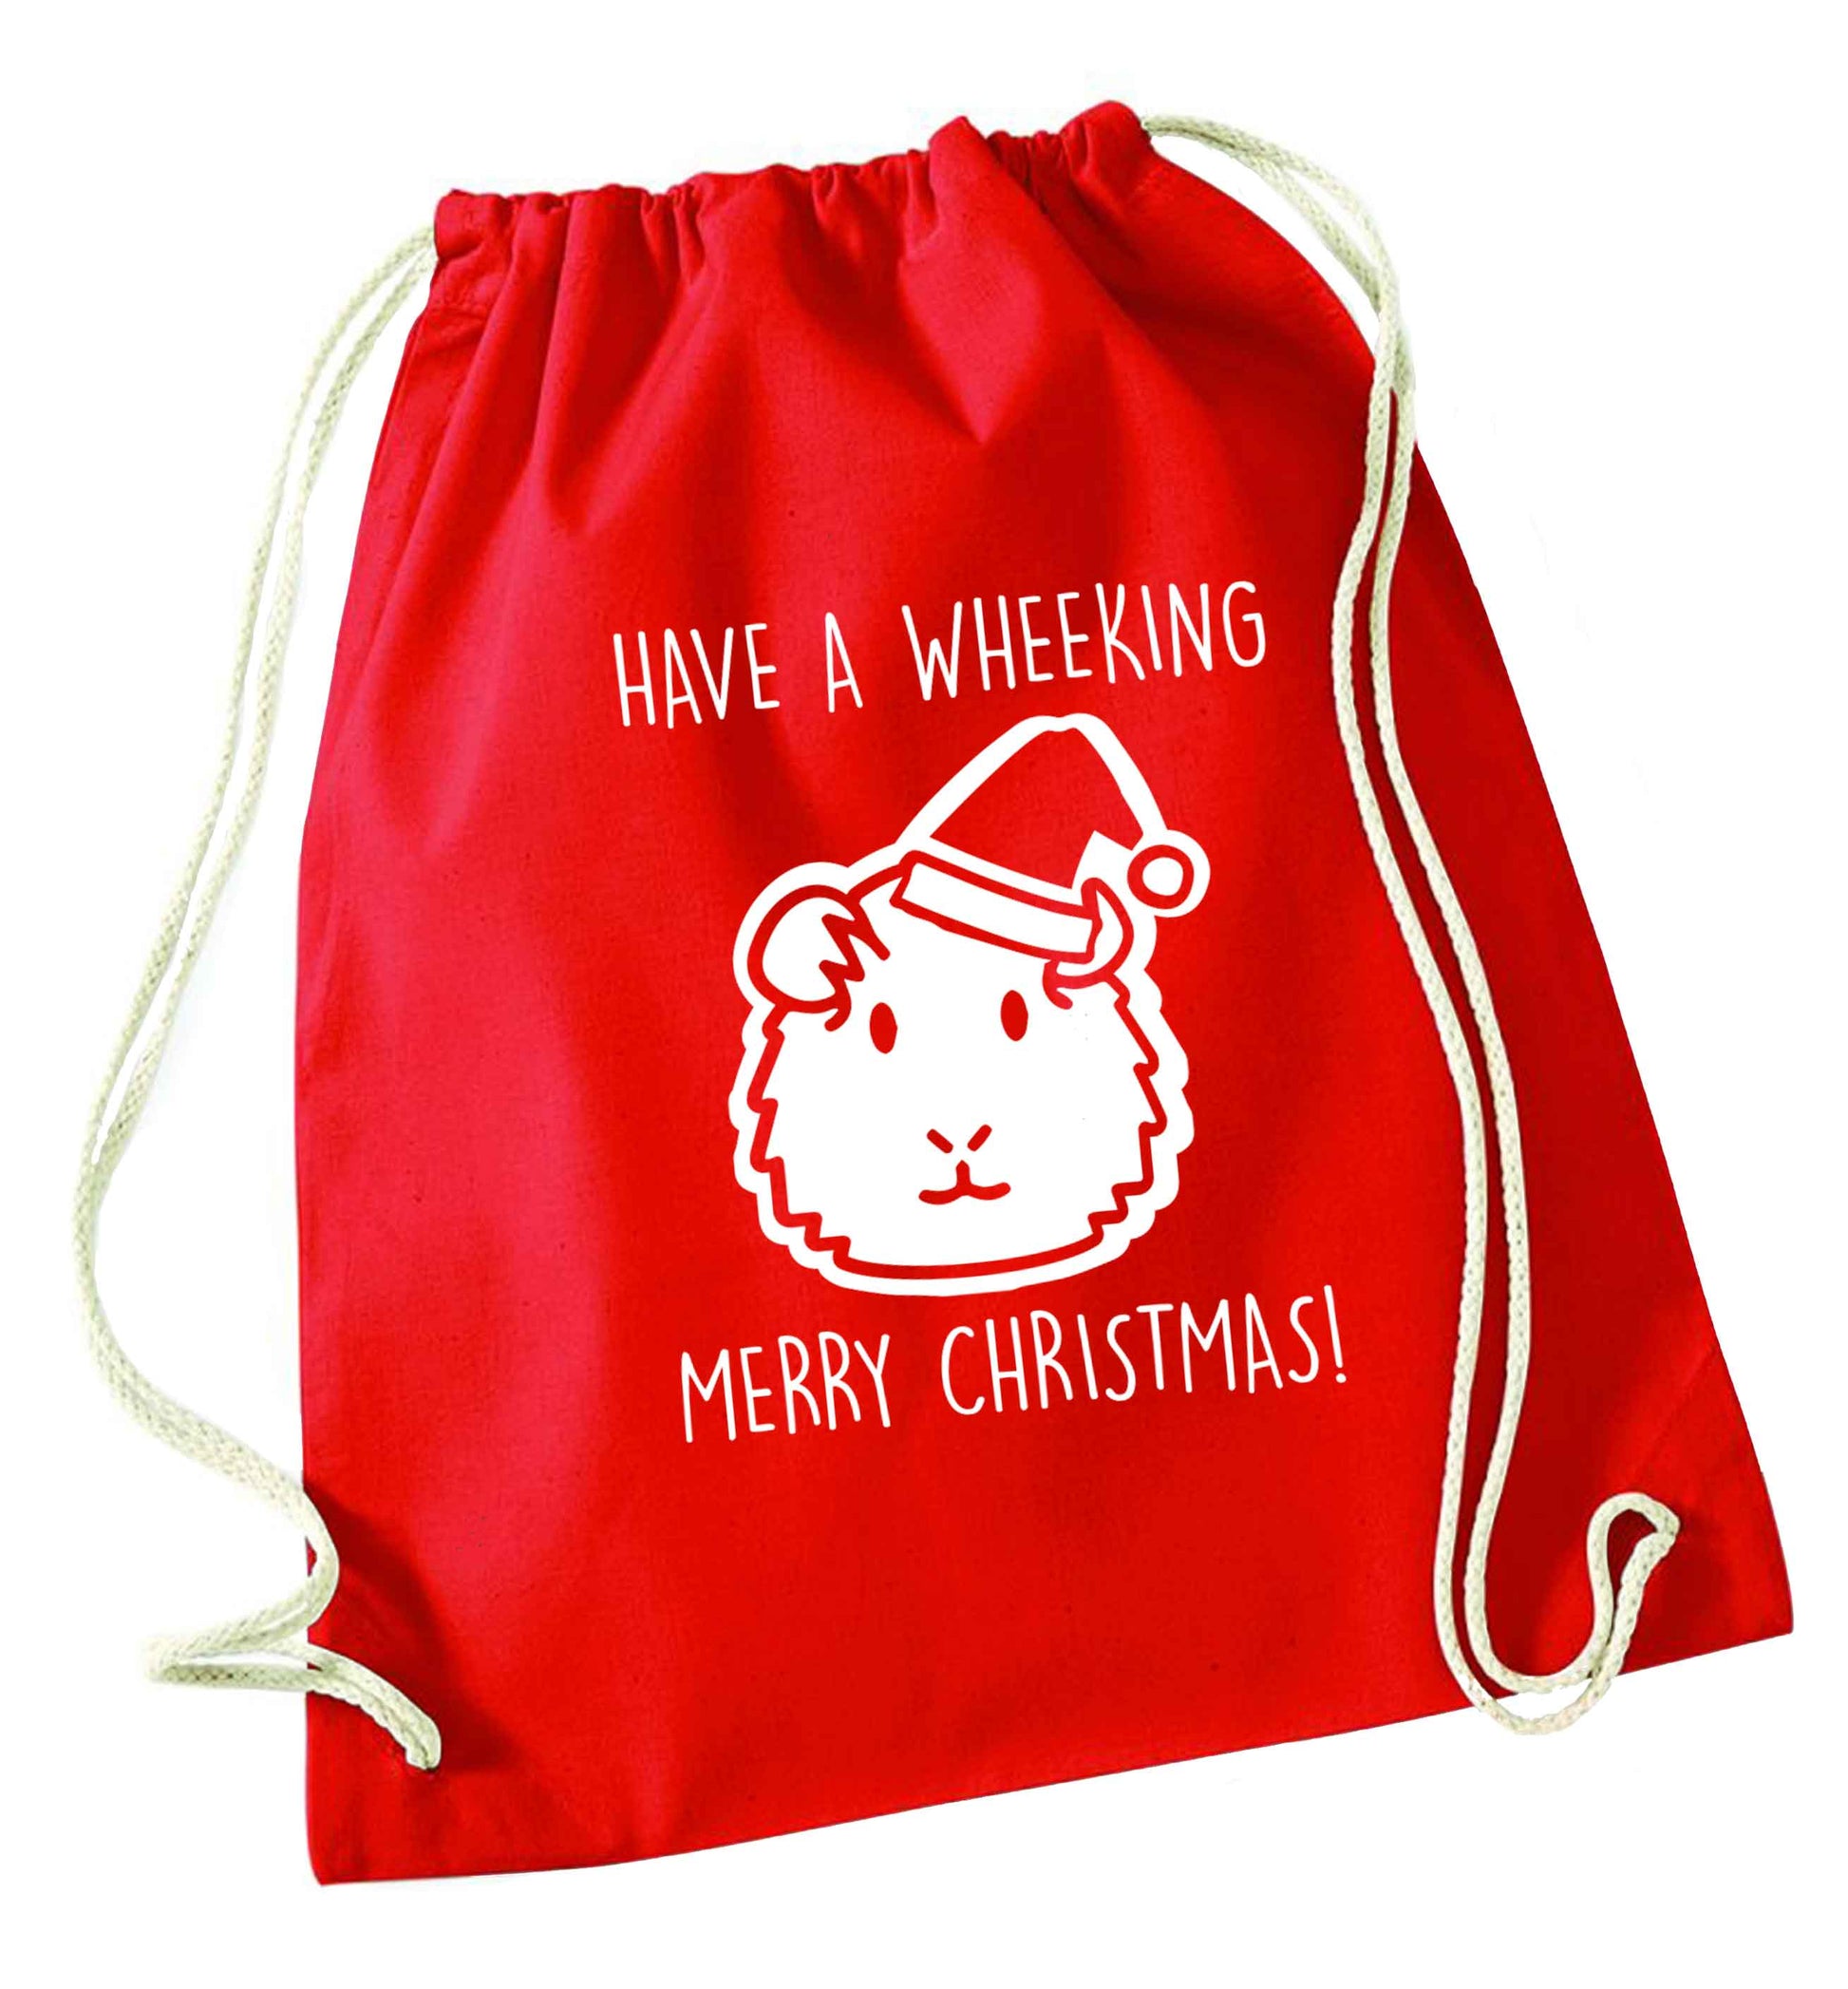 Have a wheeking merry Christmas red drawstring bag 